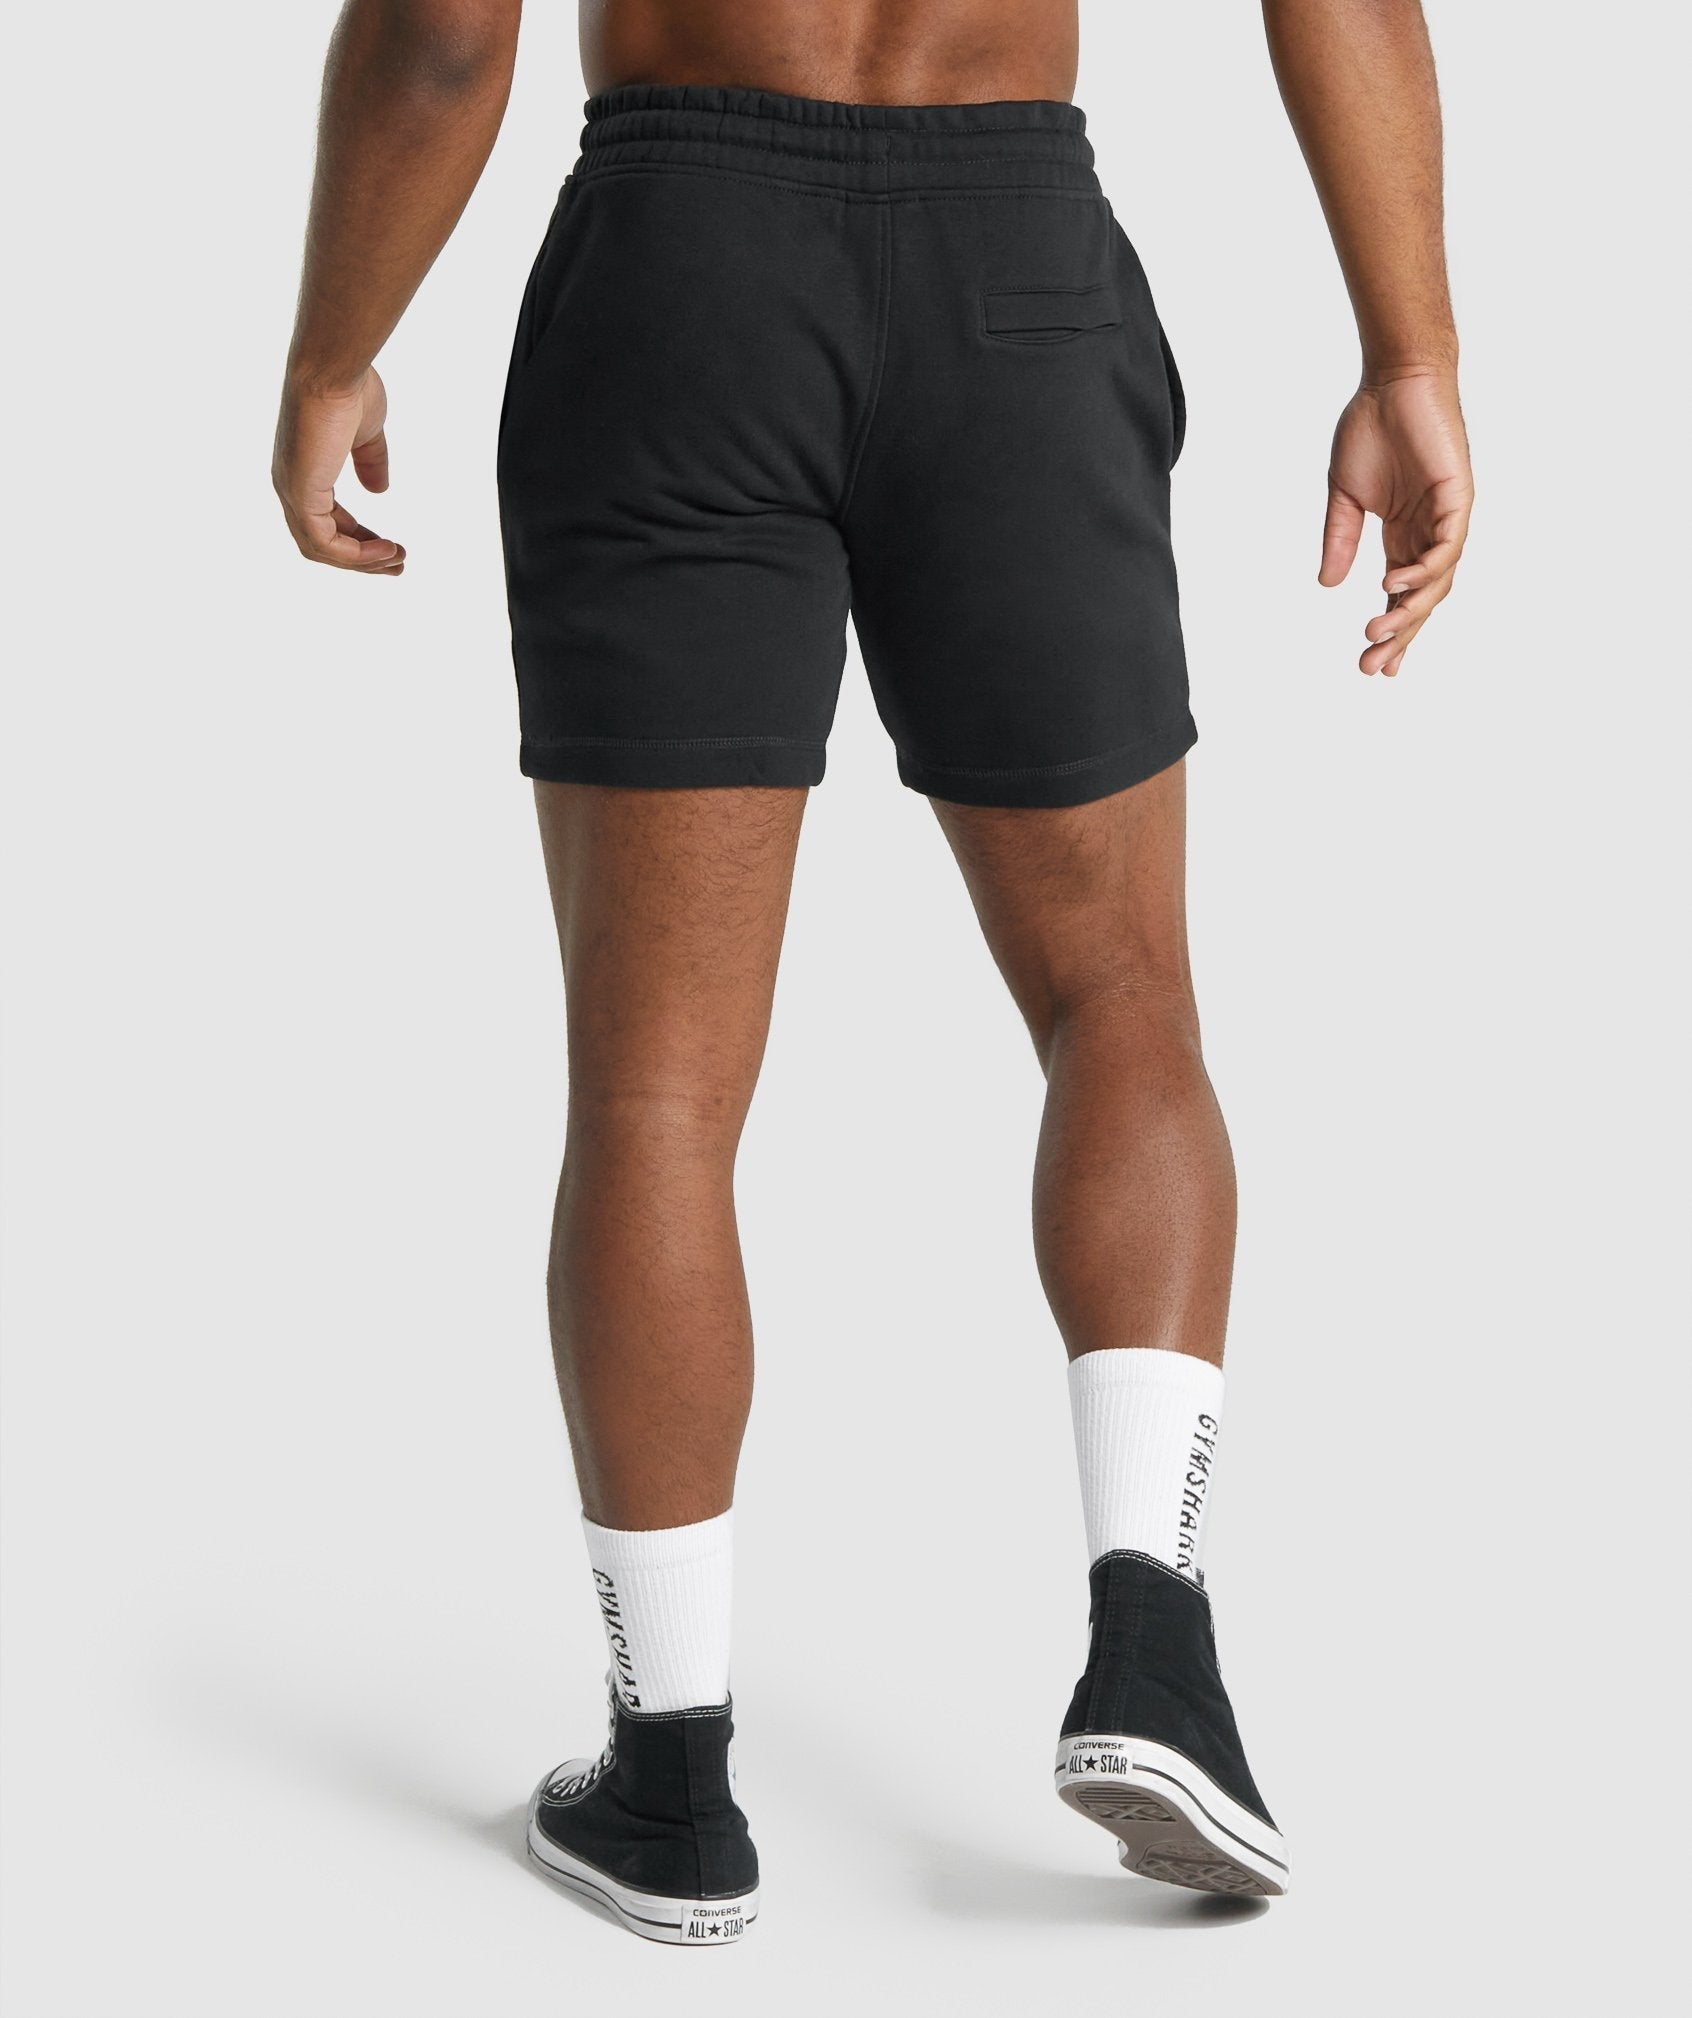 Gymshark Sport 5 2 In 1 Shorts - Onyx Grey/Black